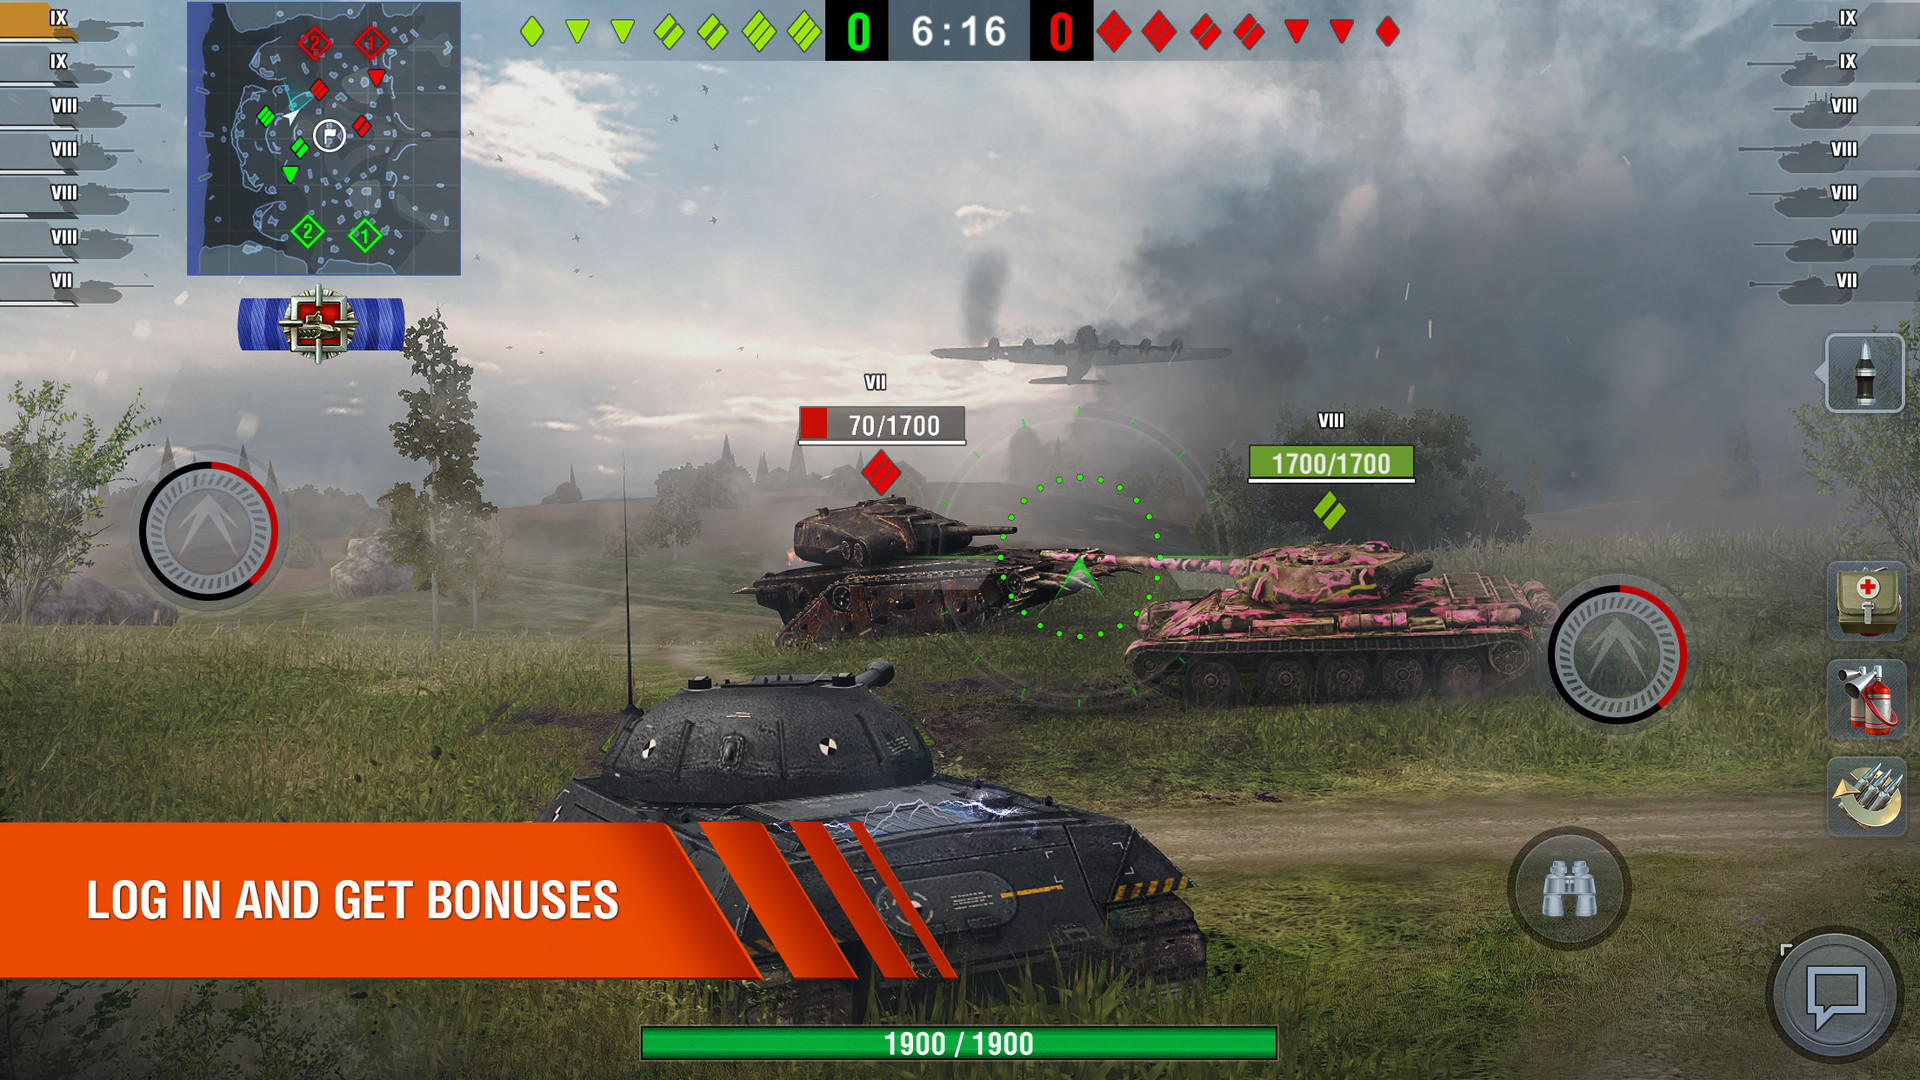 world of tanks blitz download pc windows 7